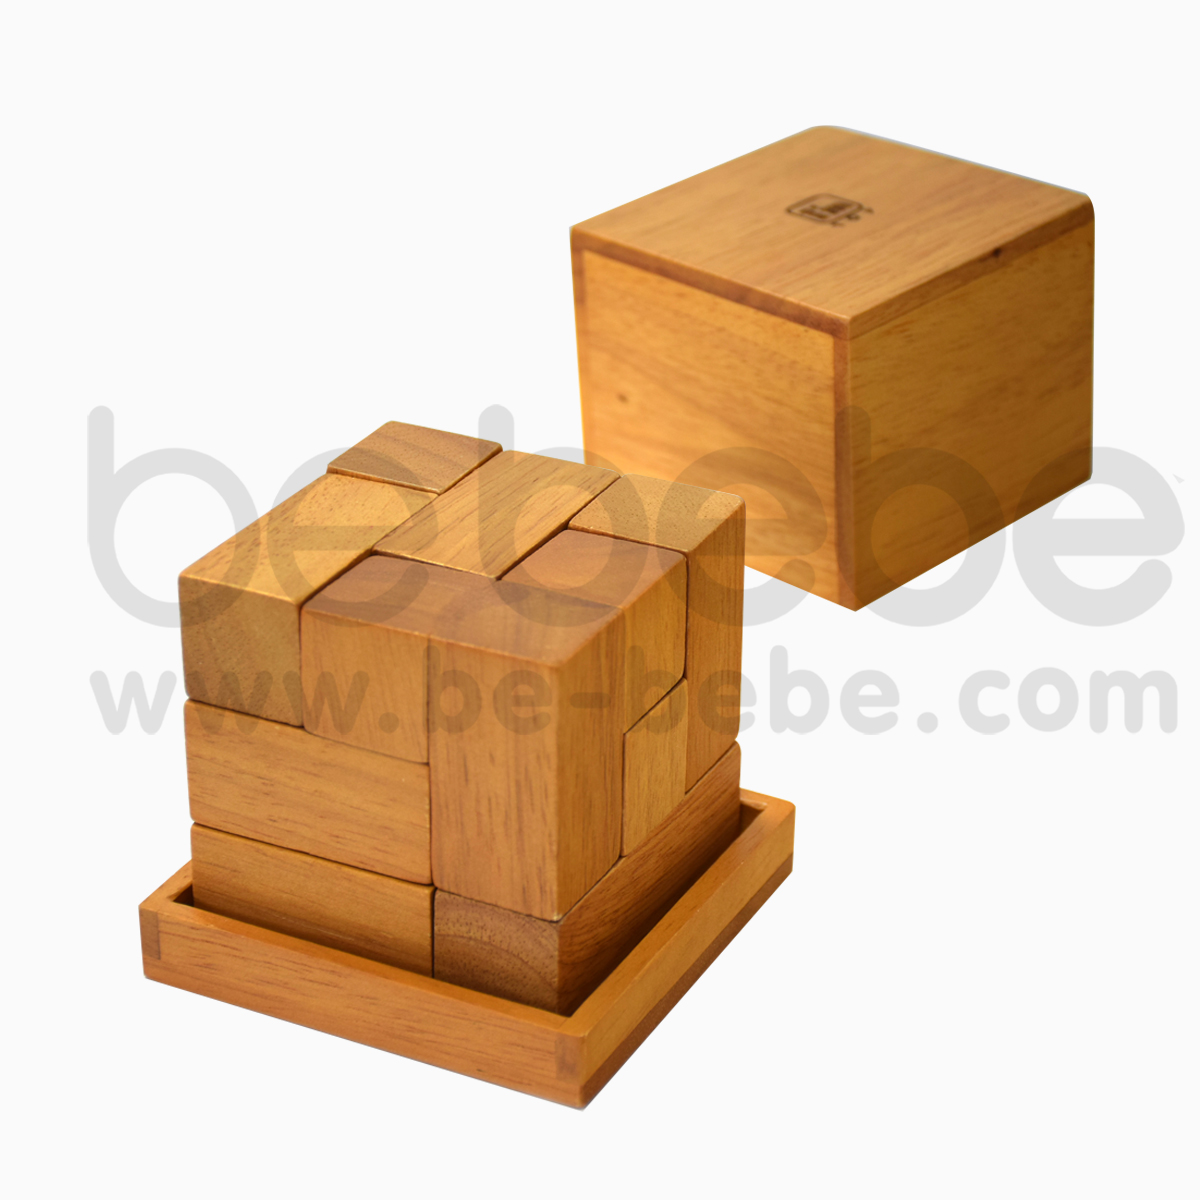 I'm : Wooden Puzzle Blocks - บล็อกไม้ปริศนา